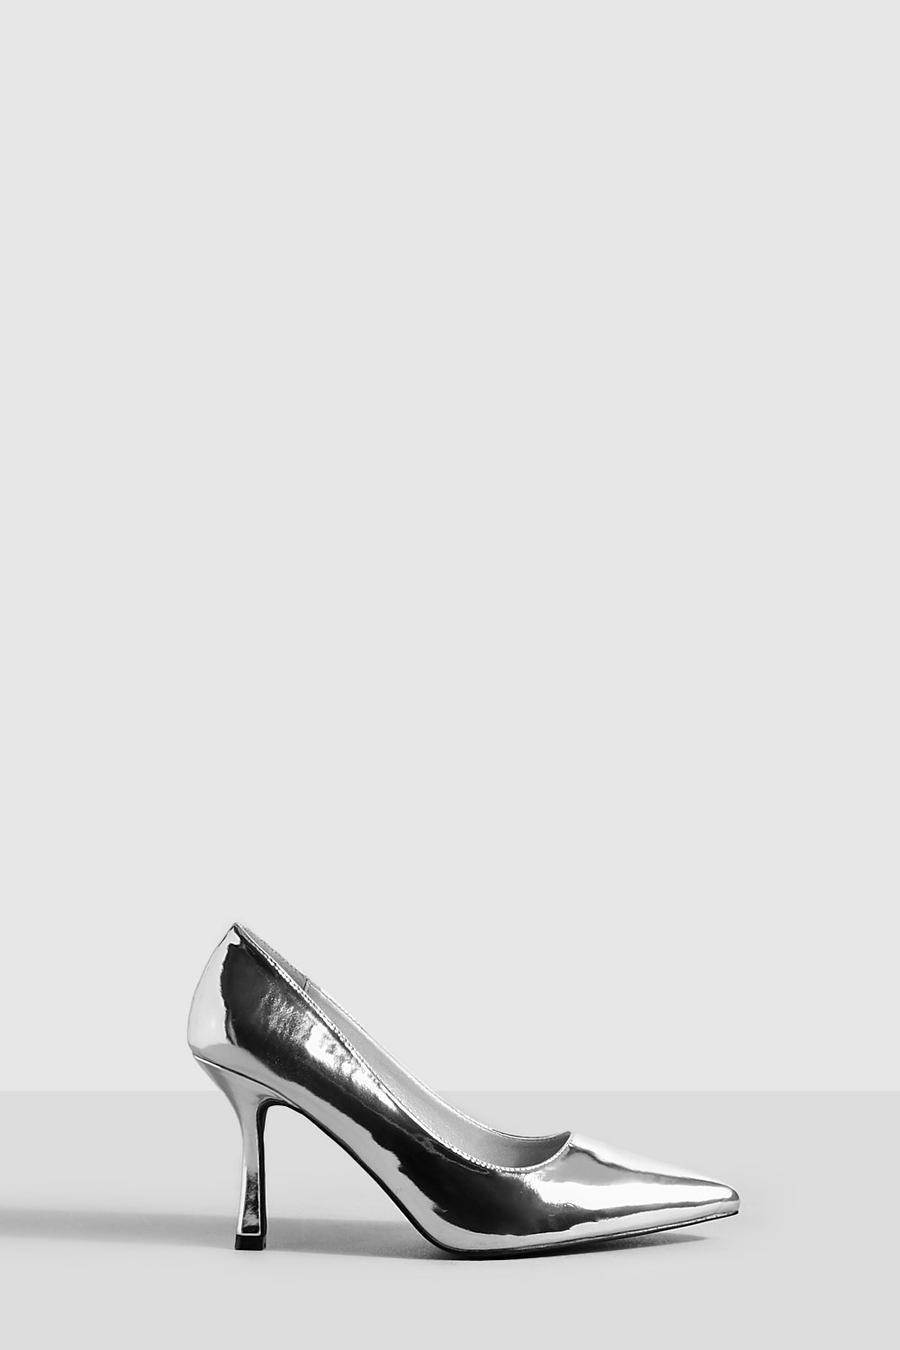 Zapatos de salón de holgura ancha metálicos con tacón de aguja bajo, Silver image number 1